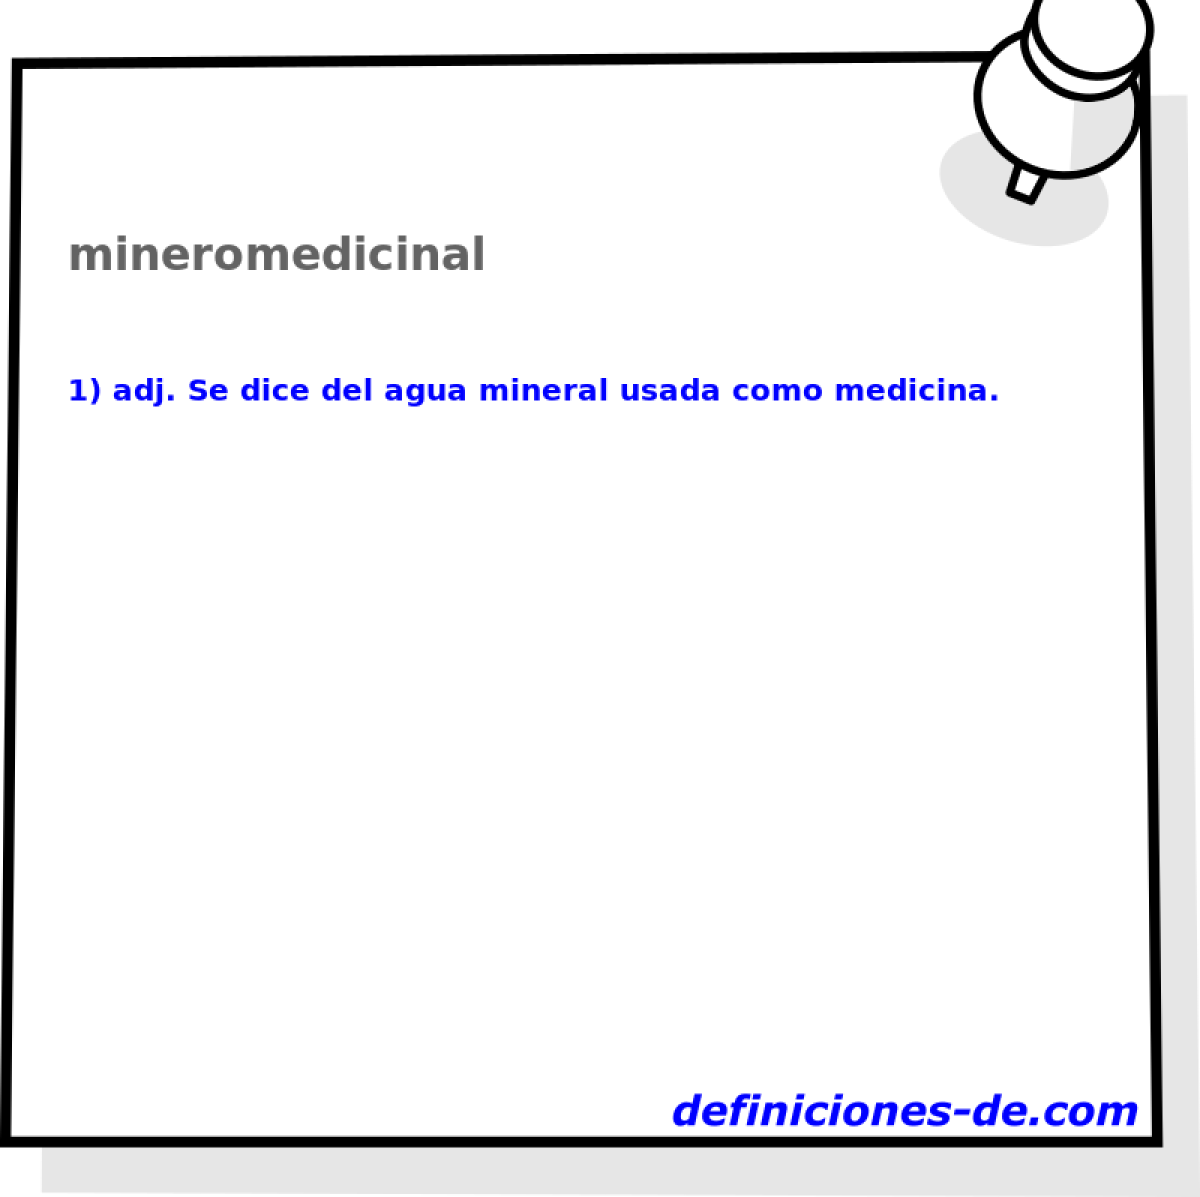 mineromedicinal 